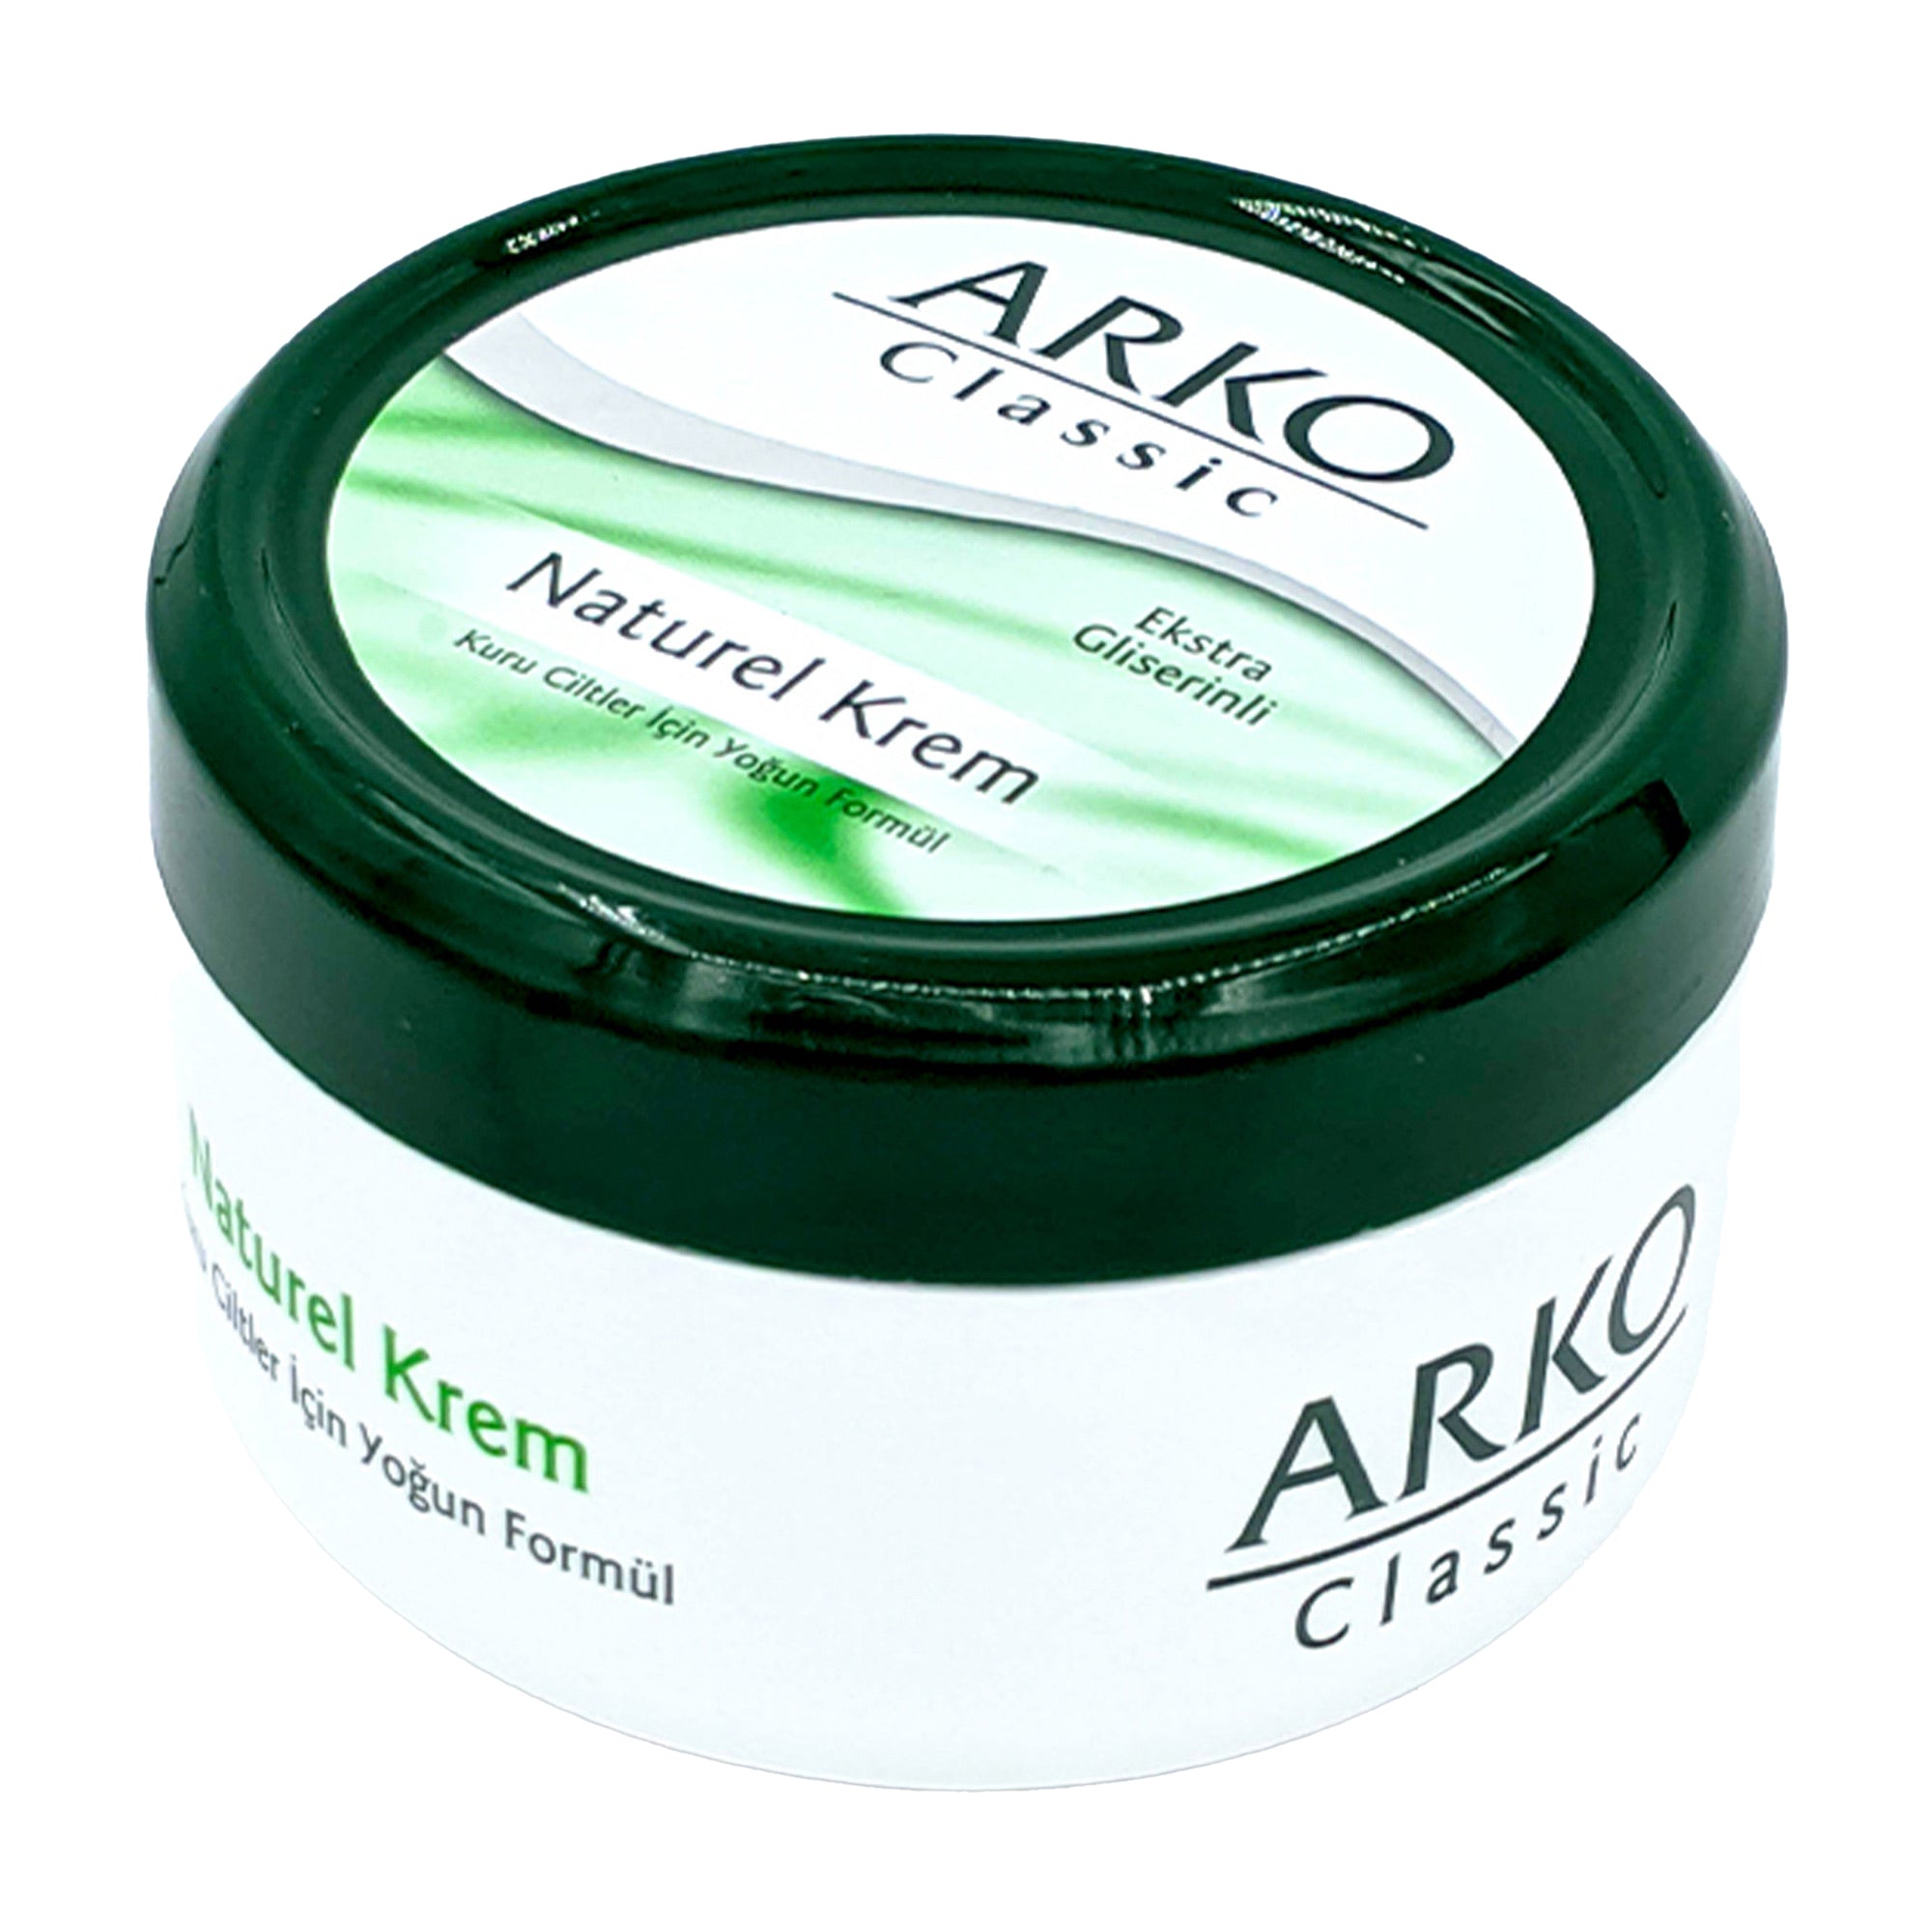 Arko - Classic Natural Cream 300ml